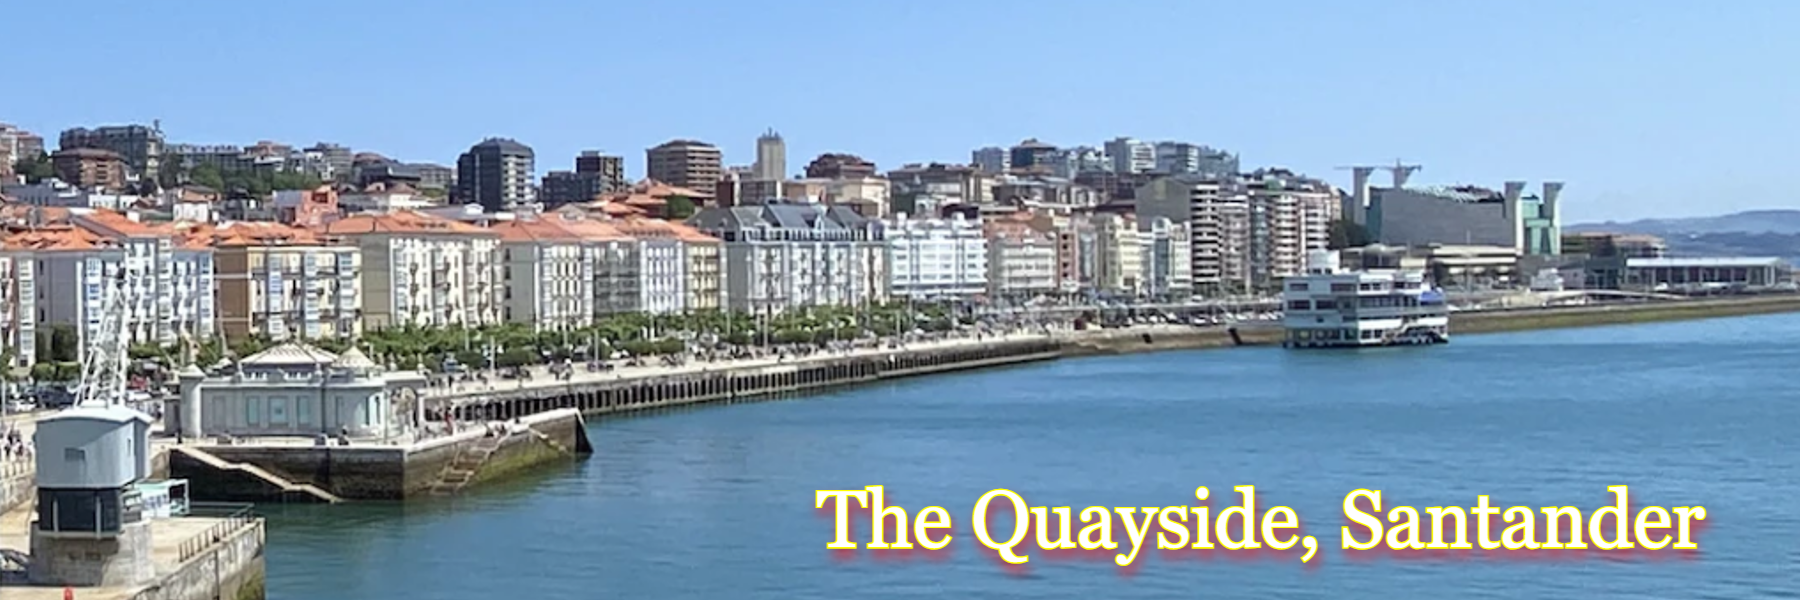 Arriving in Spain: The Quayside, Santander